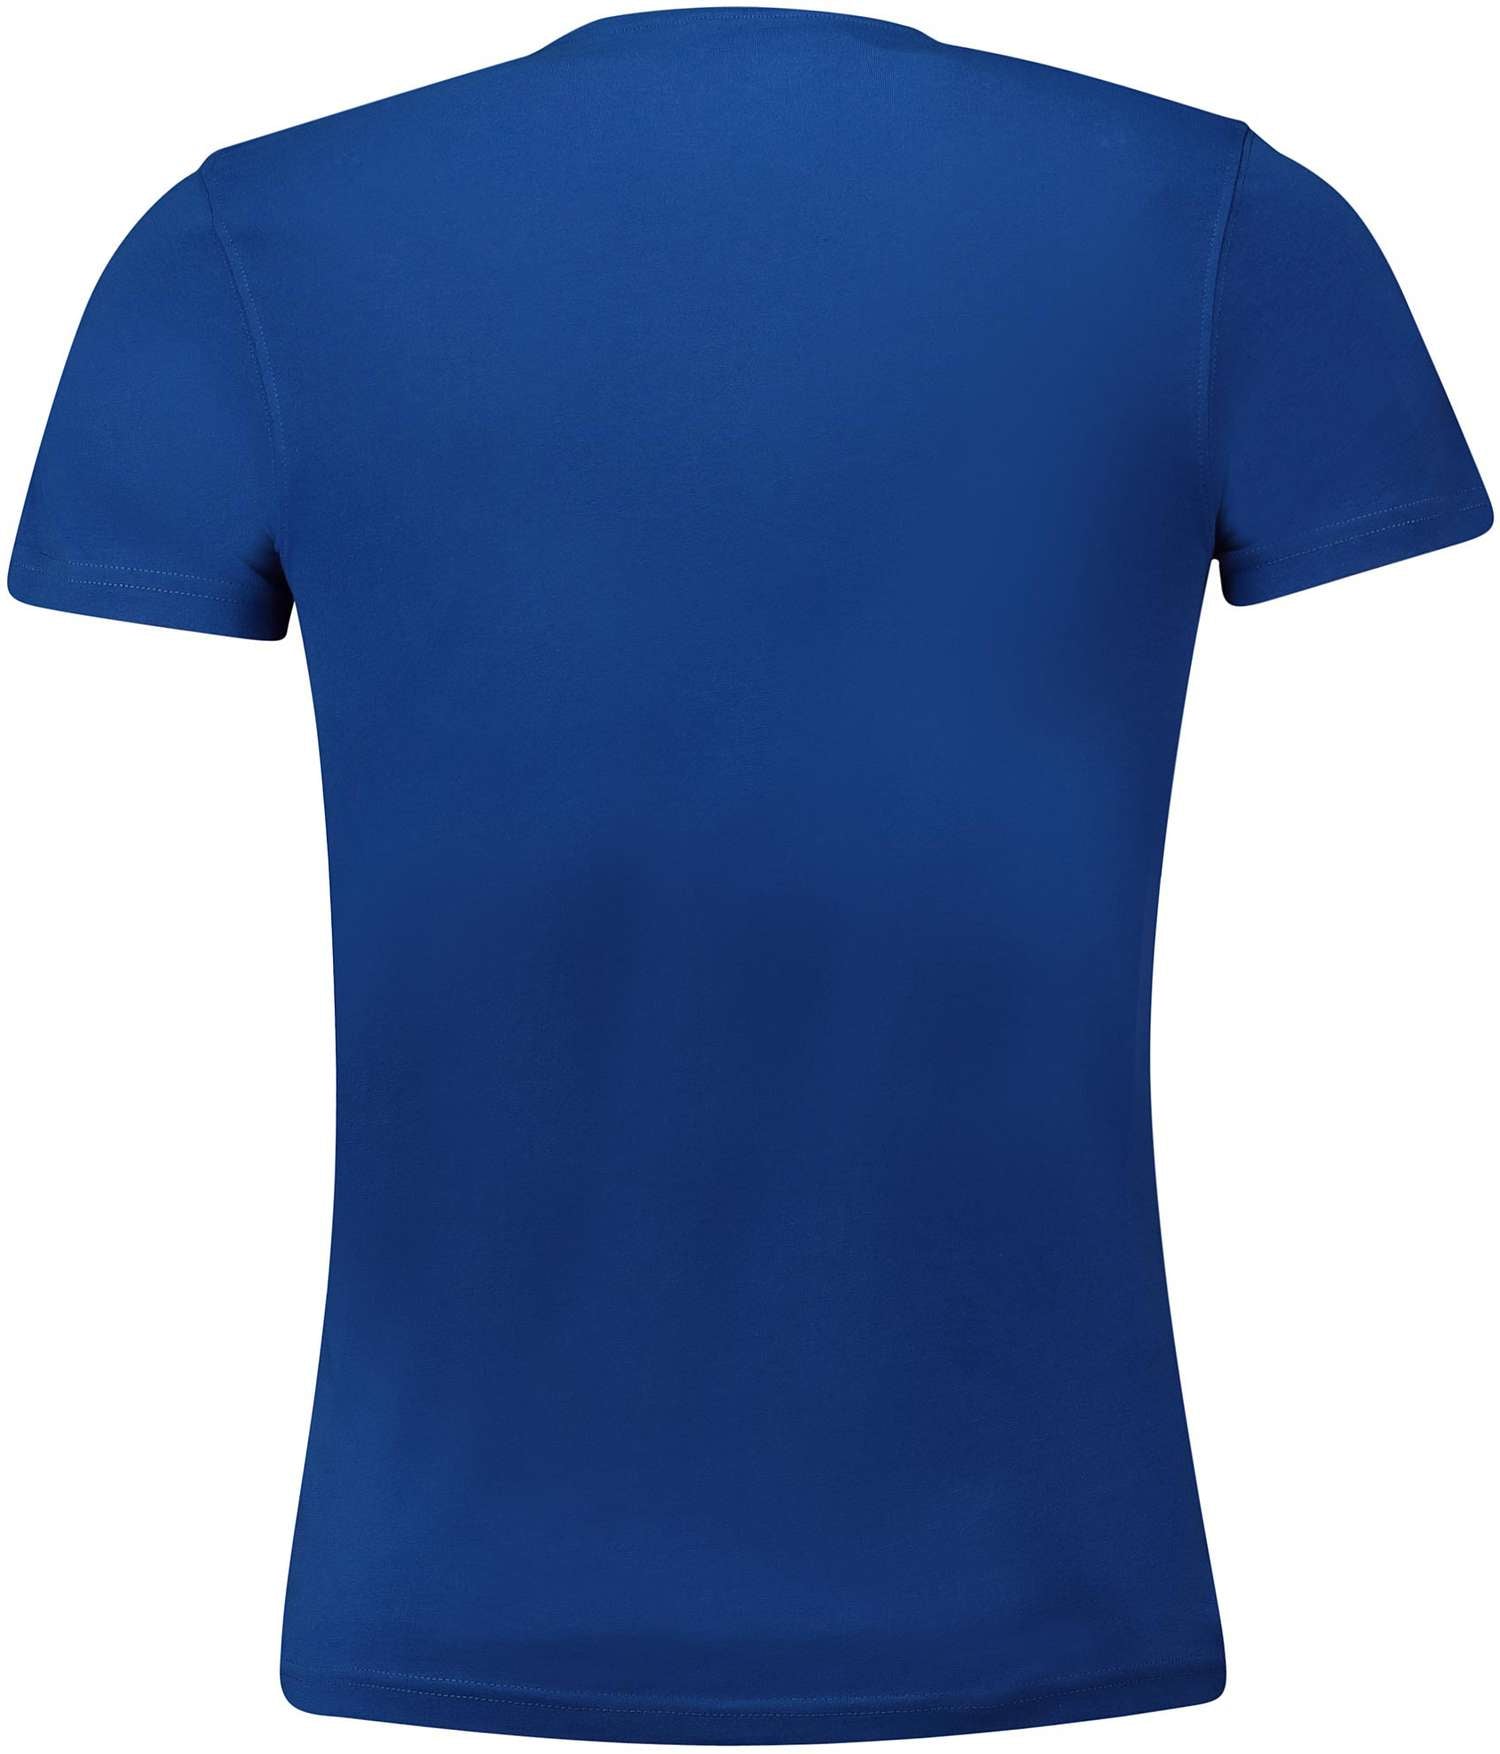 Fanatics - NHL New York Rangers Graphic Wordmark T-Shirt - Blau